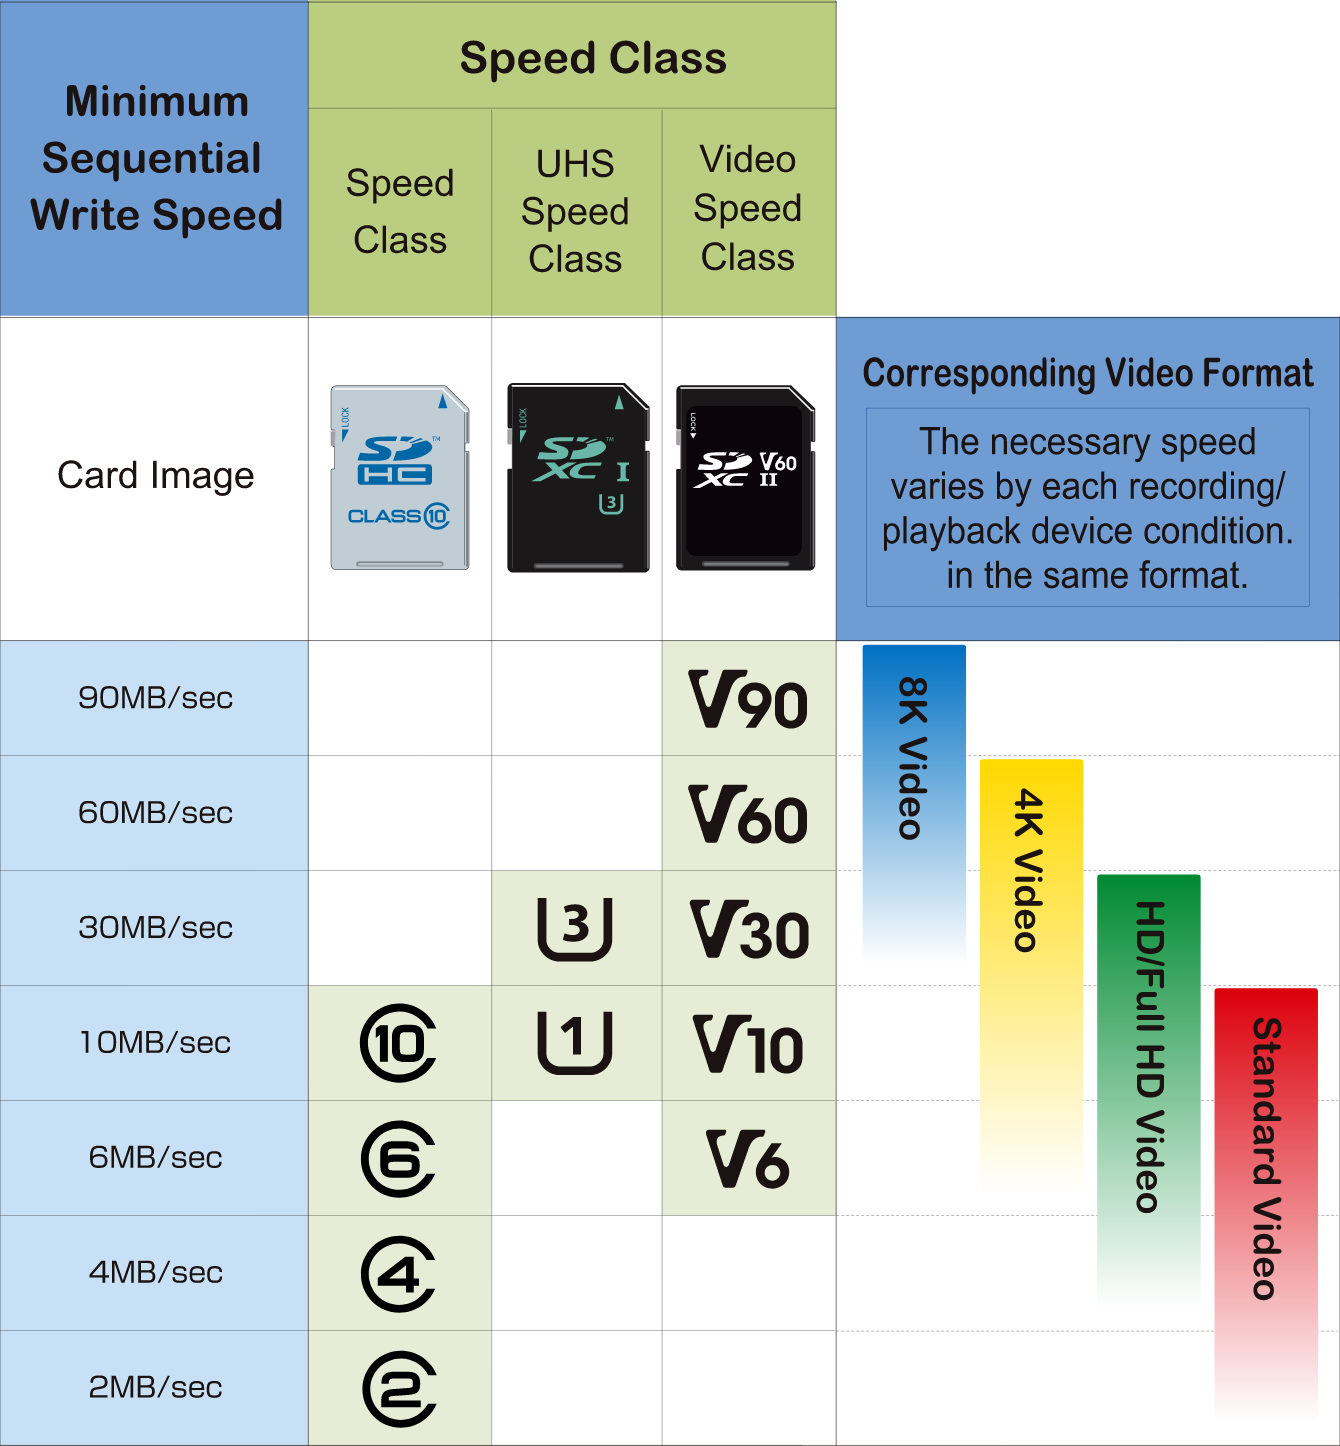 SD Card Speed